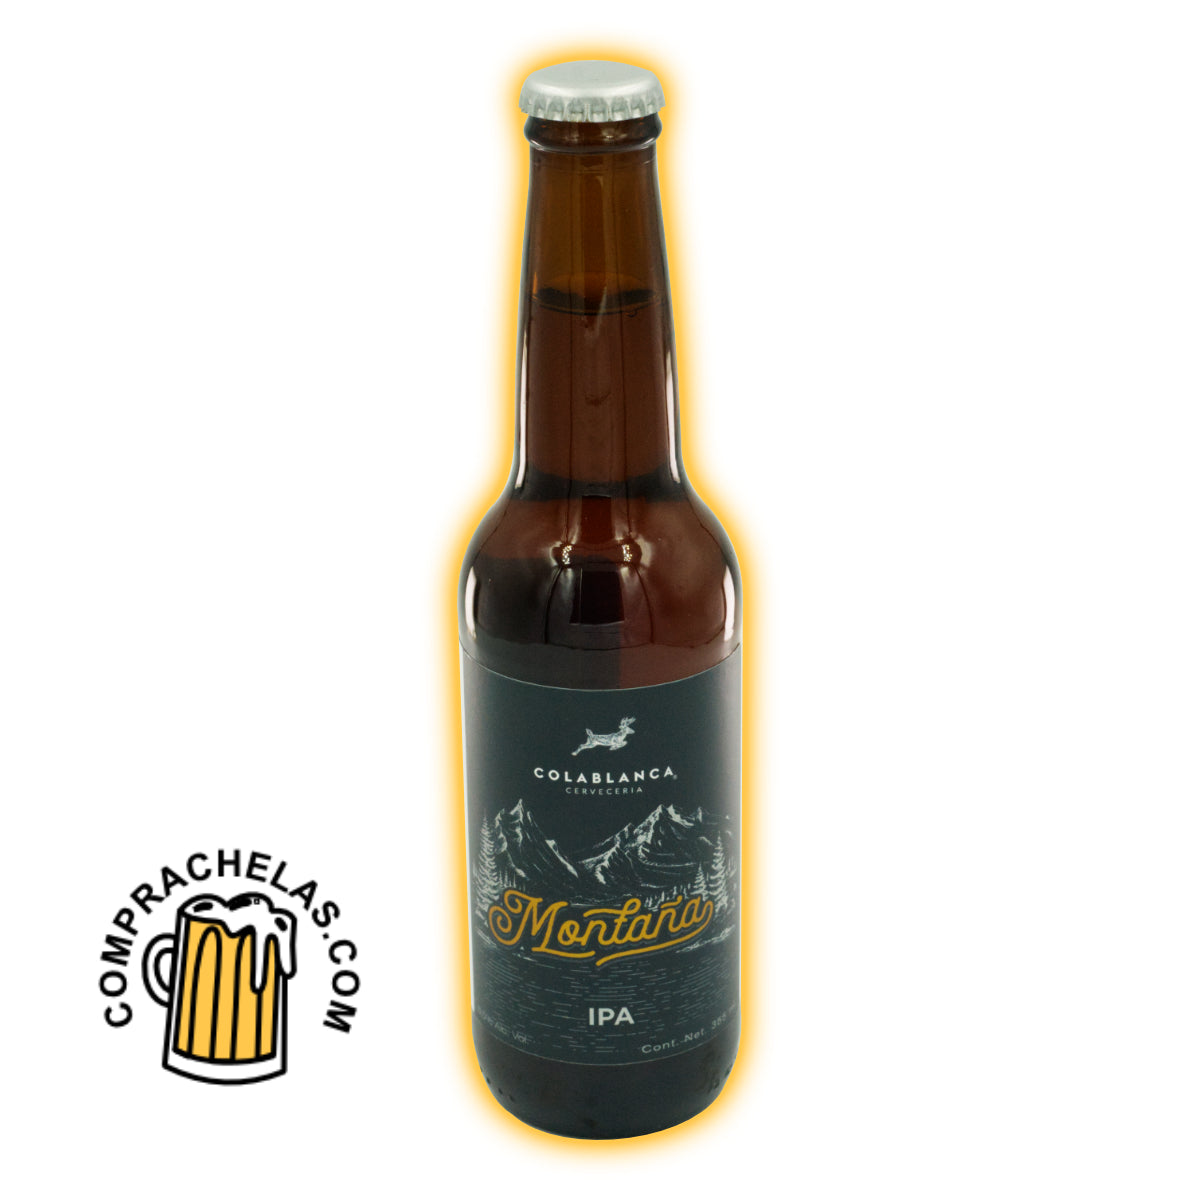 Colablanca Montaña: IPA India Pale Ale Beer with exquisite flavor